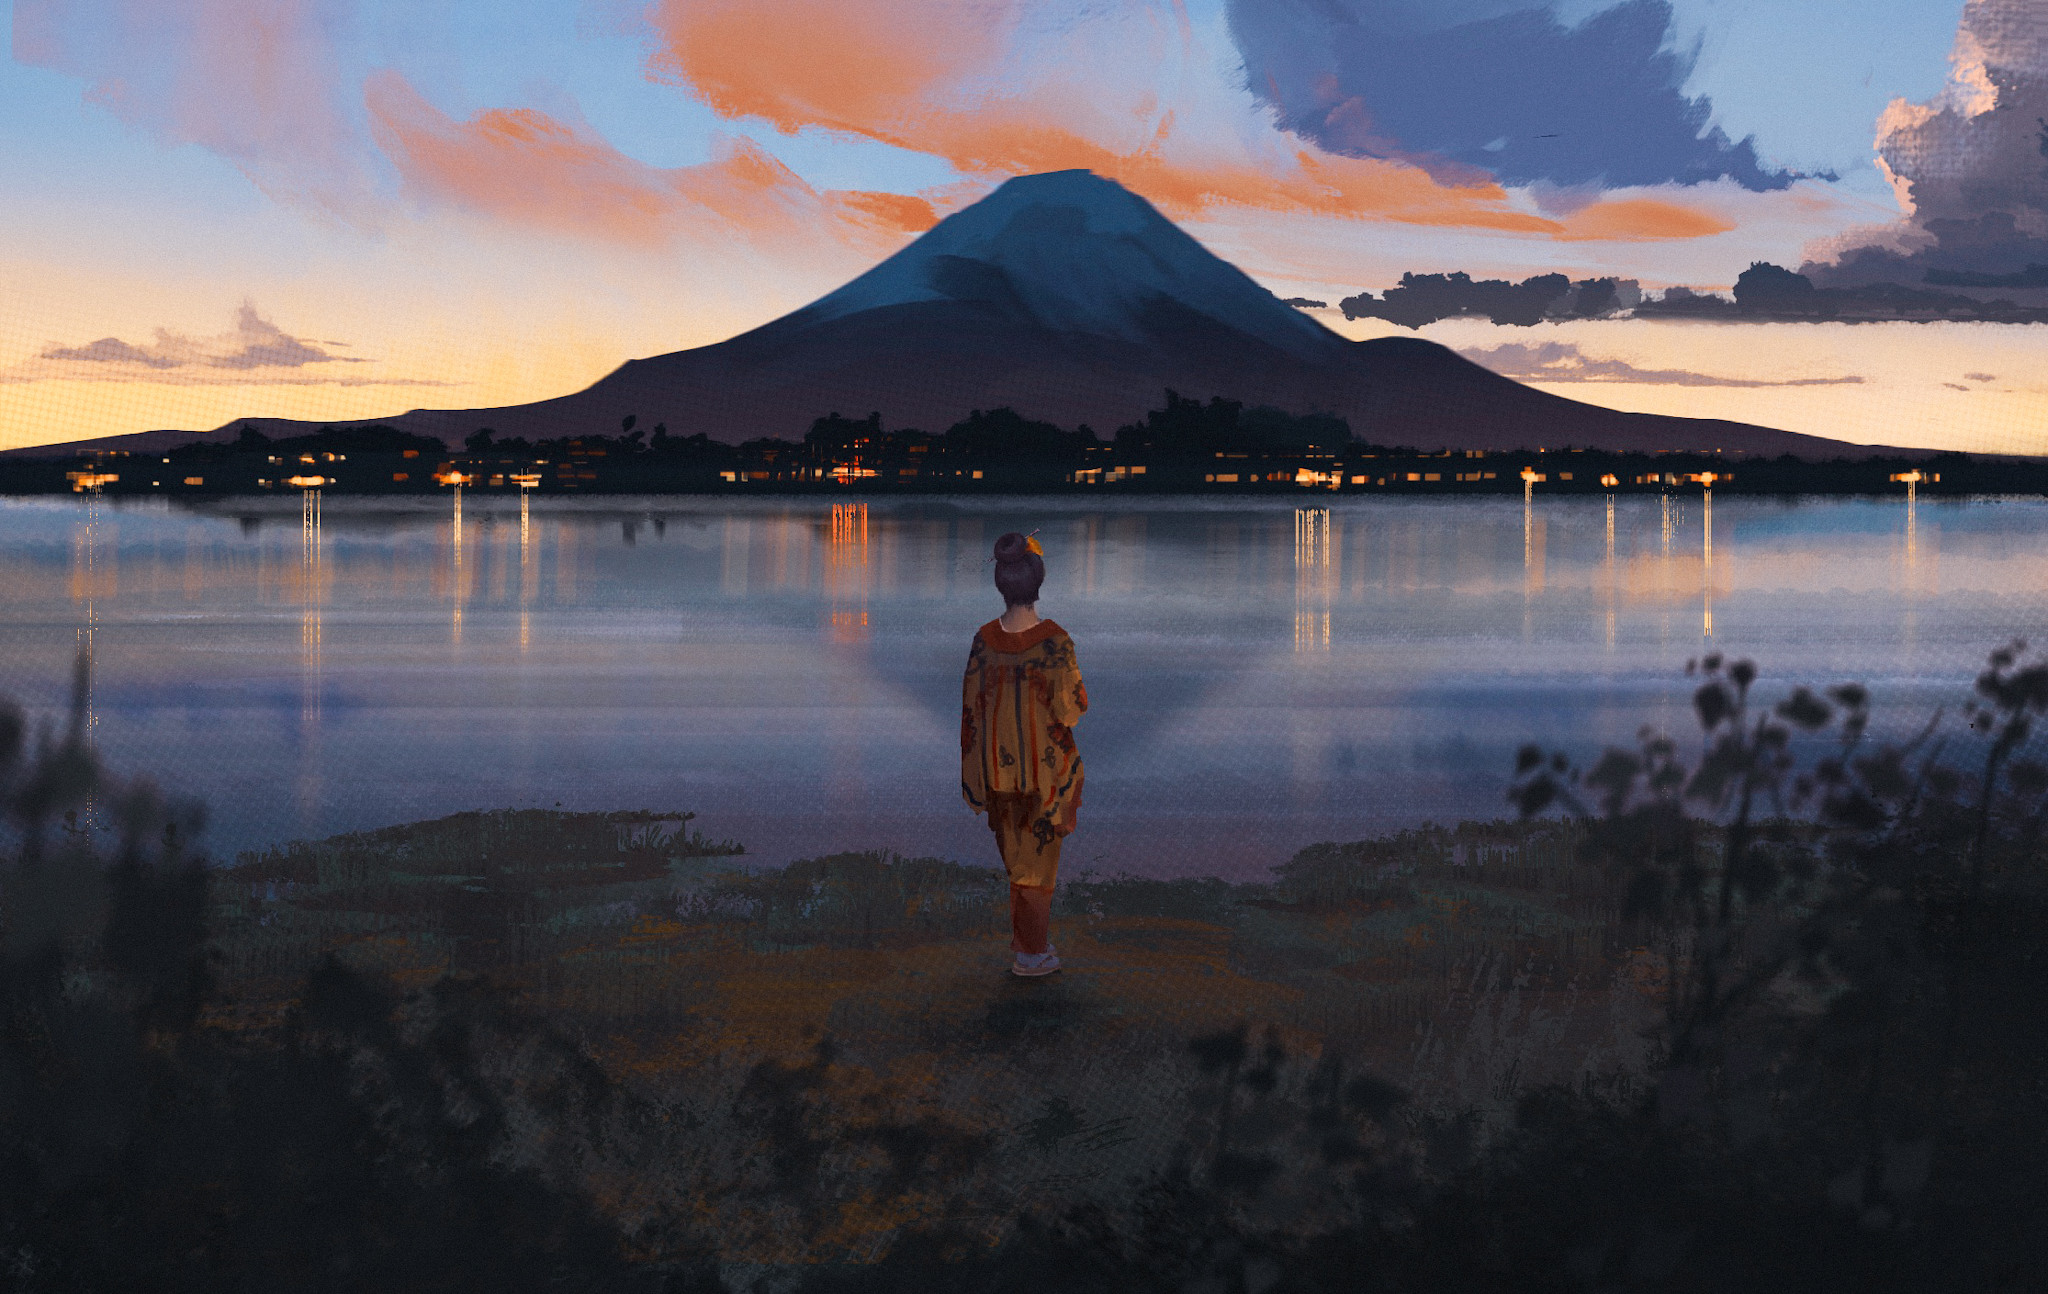 Artwork Digital Art Surendra Rajawat Fuji Mountain Japanese Clothes Reflection Clouds Landscape 2048x1294